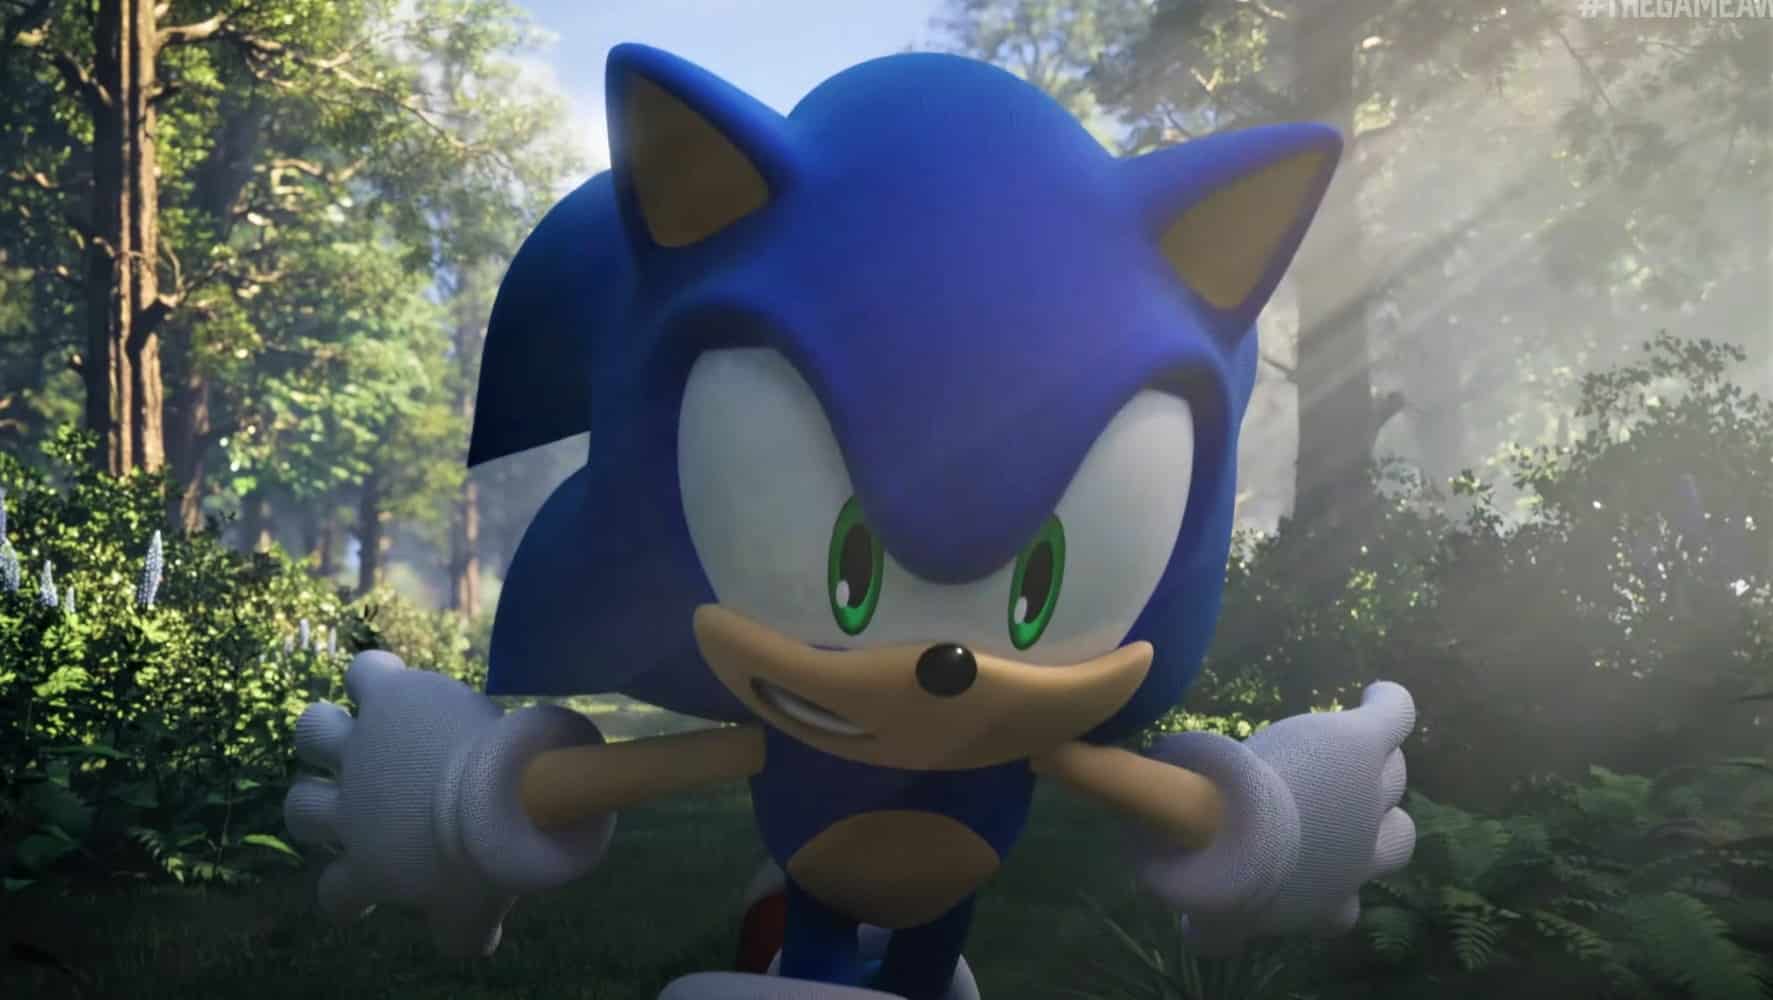 Sonic Frontiers Gameplay Trailer Shows Off Speedy Combat - GameSpot